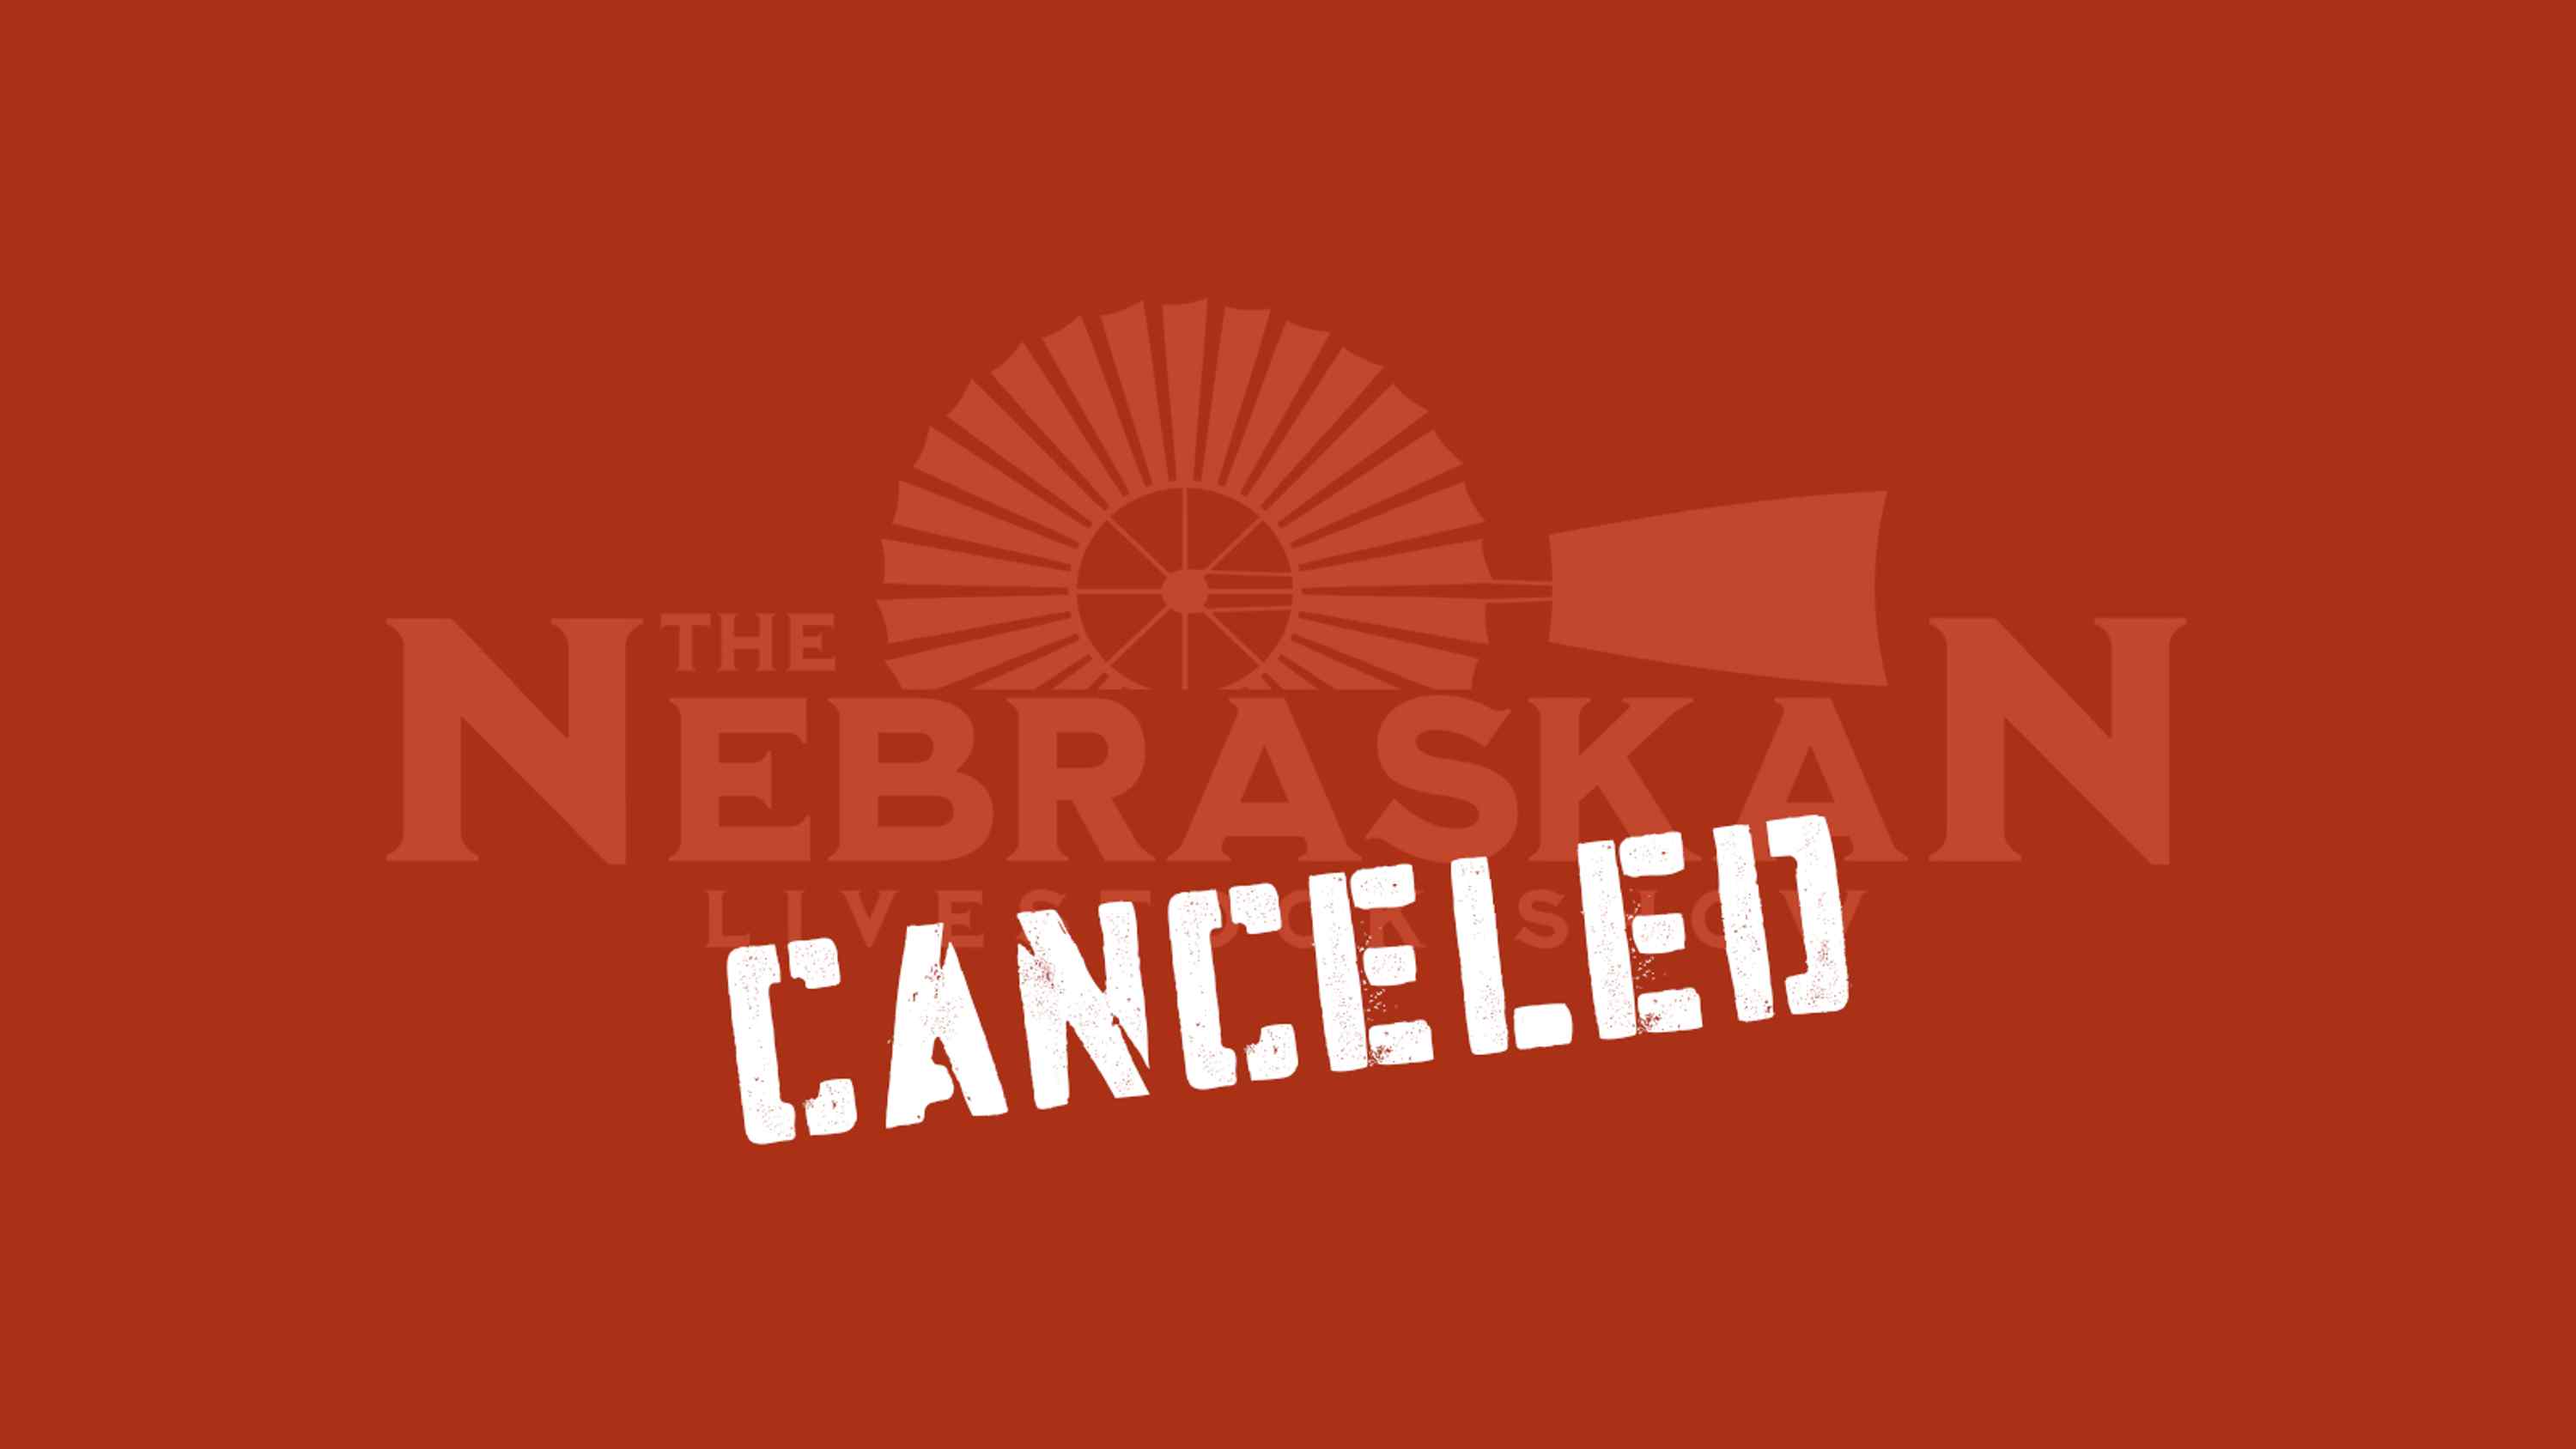 The Nebraskan Canceled